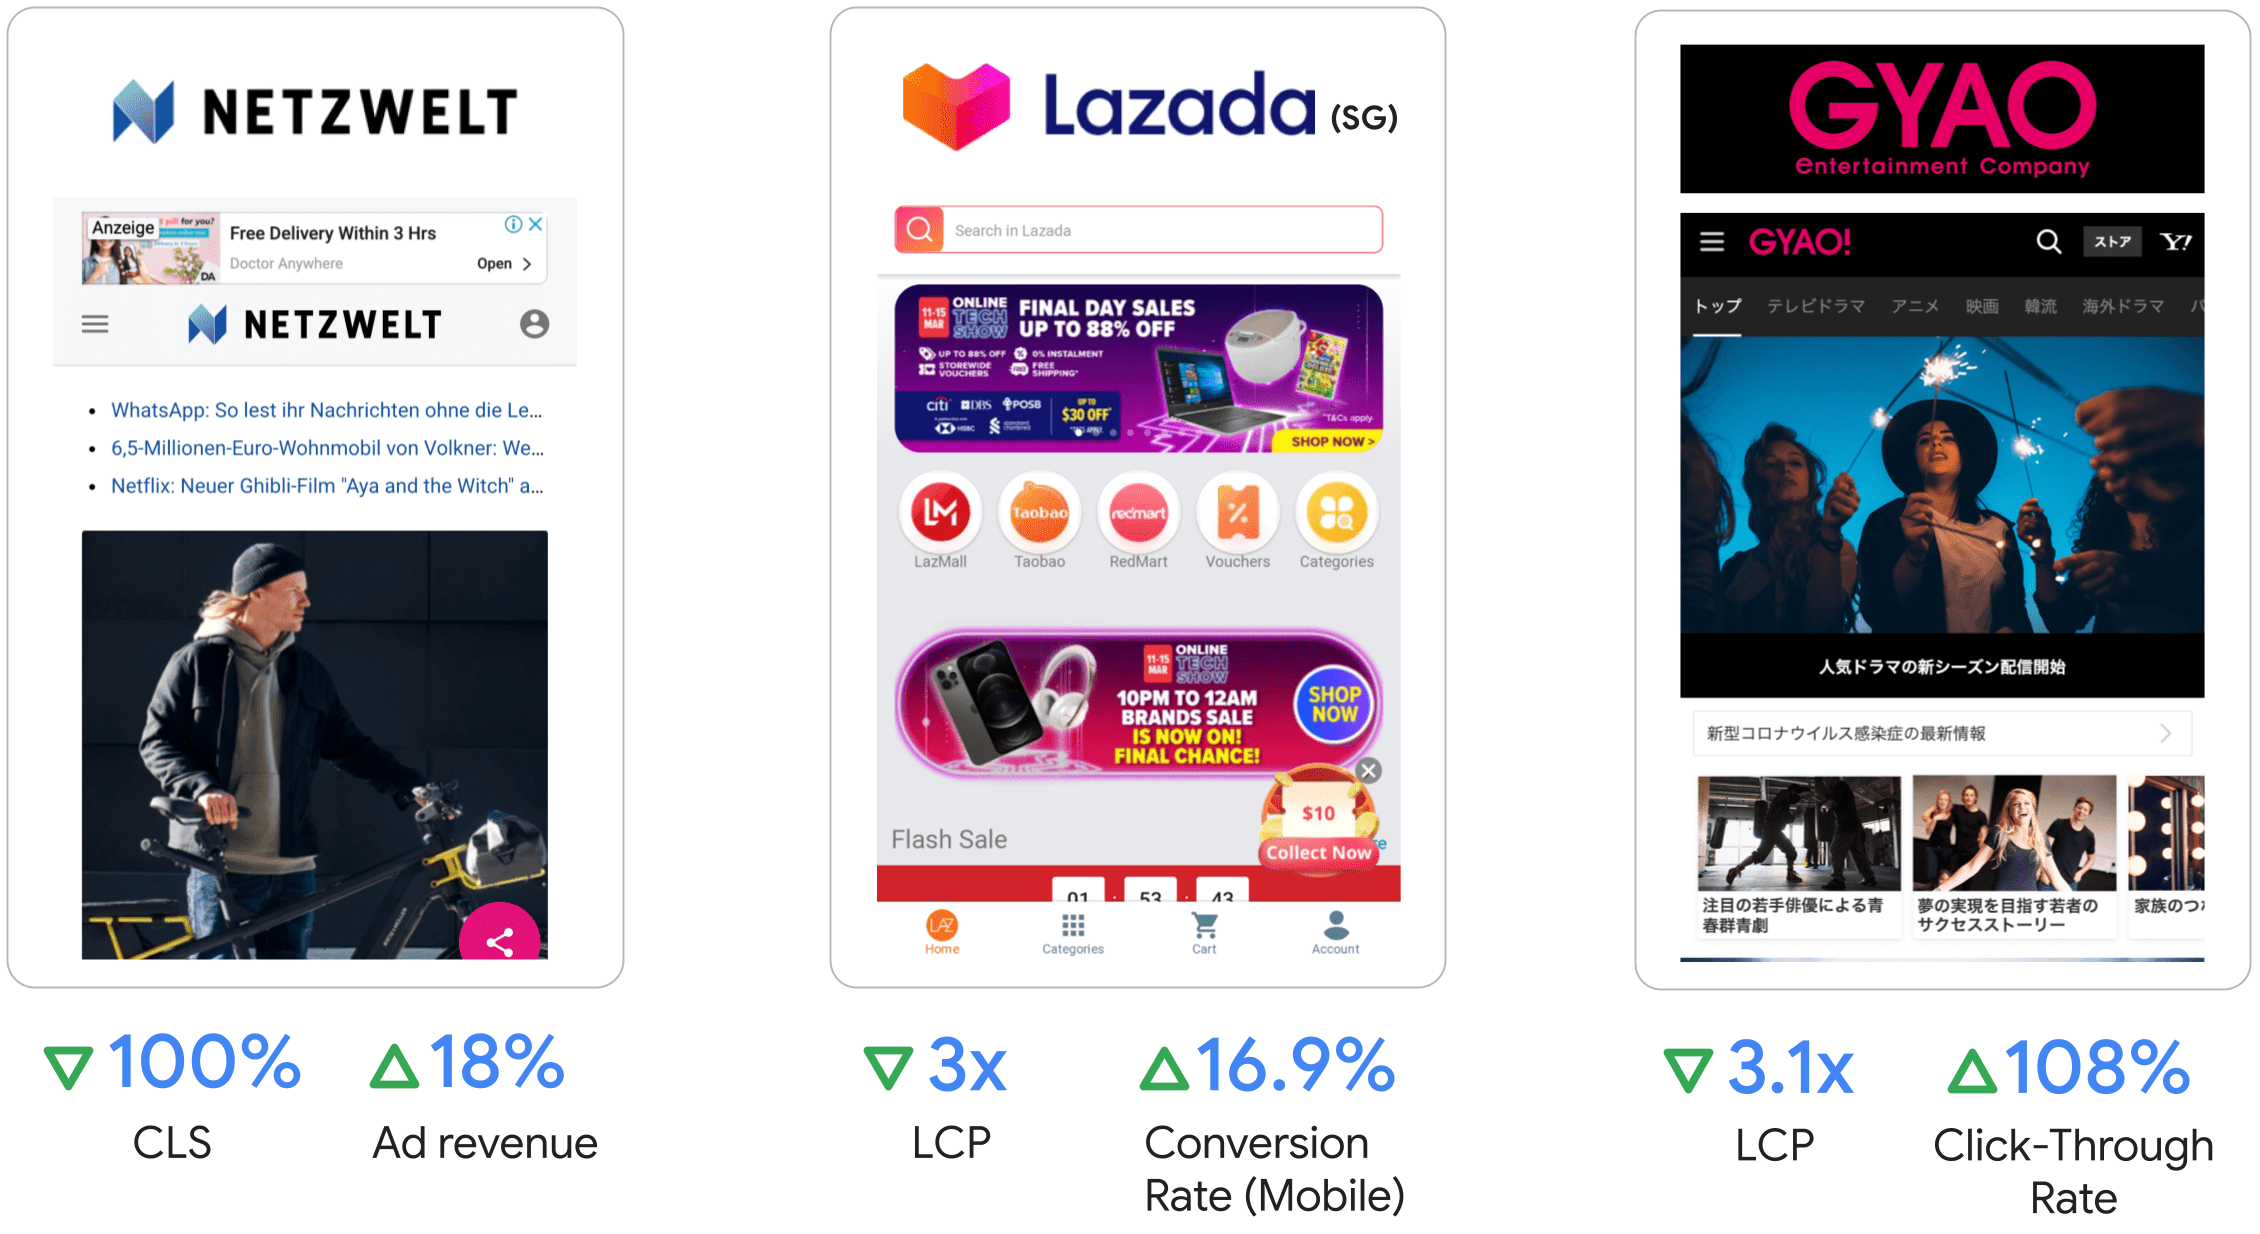 Netzwellt는 광고 수익이 18%,
Lazada는 모바일에서 LCP는 3배, 전환율은 16.9% 증가했으며,
GYAO는 LCP는 3.1배, 클릭률은 108% 개선되었습니다.